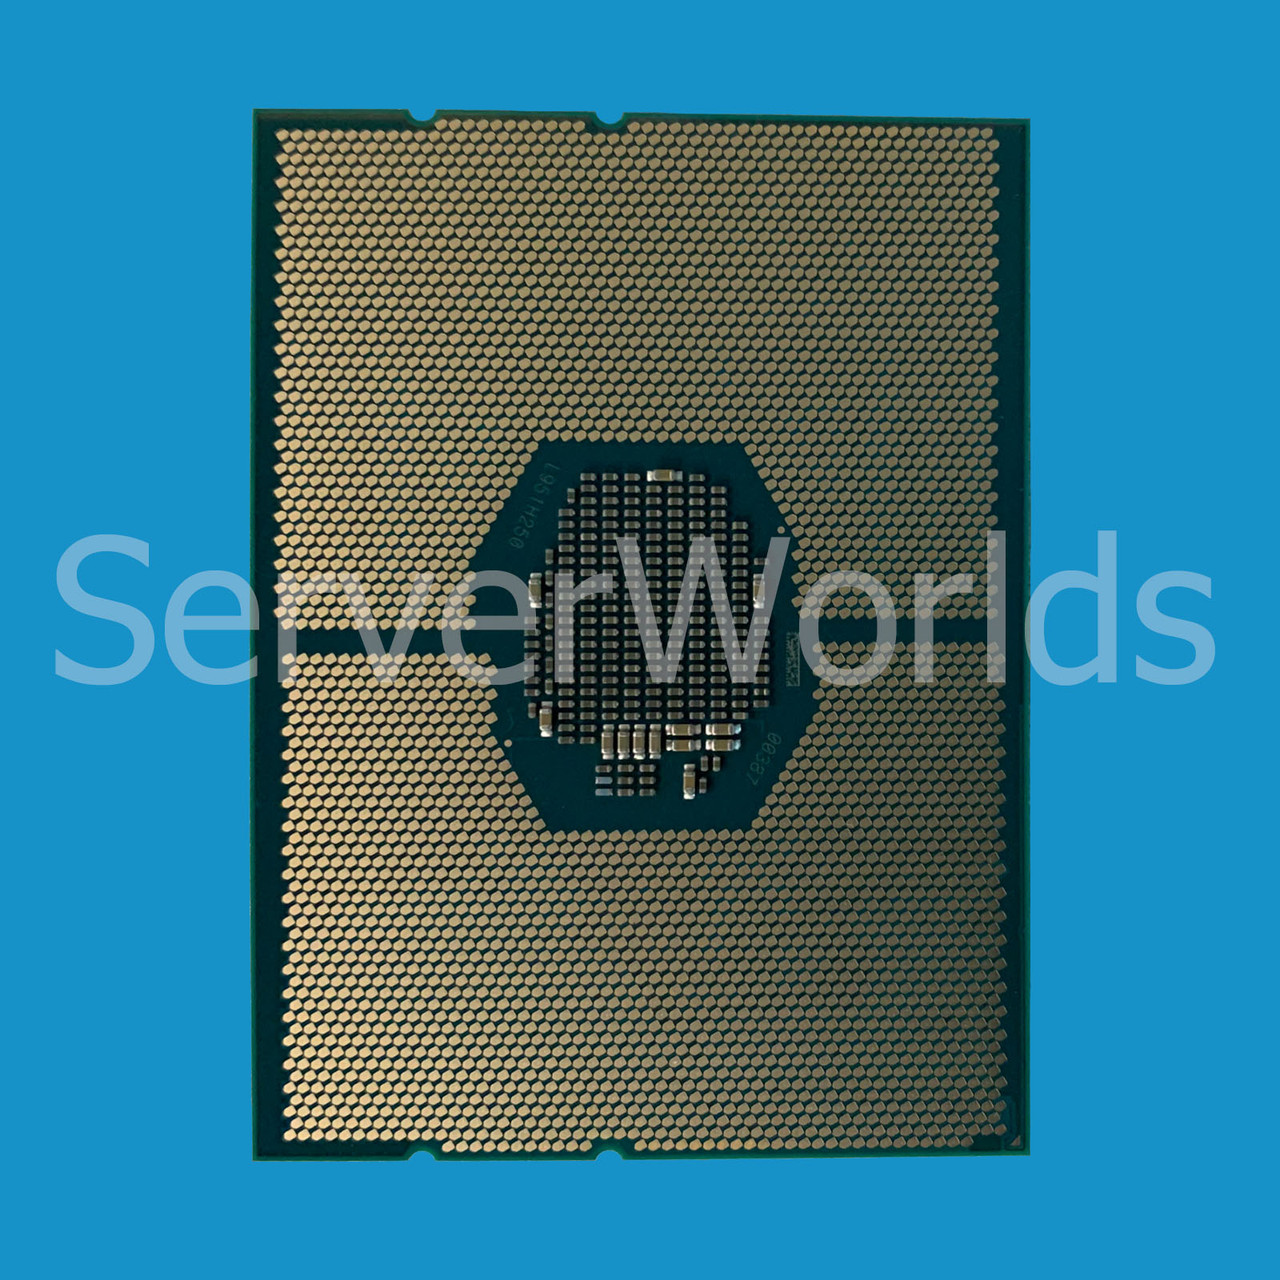 Intel SRFBA 8C Xeon Silver 4215 2.50Ghz 11MB Processor